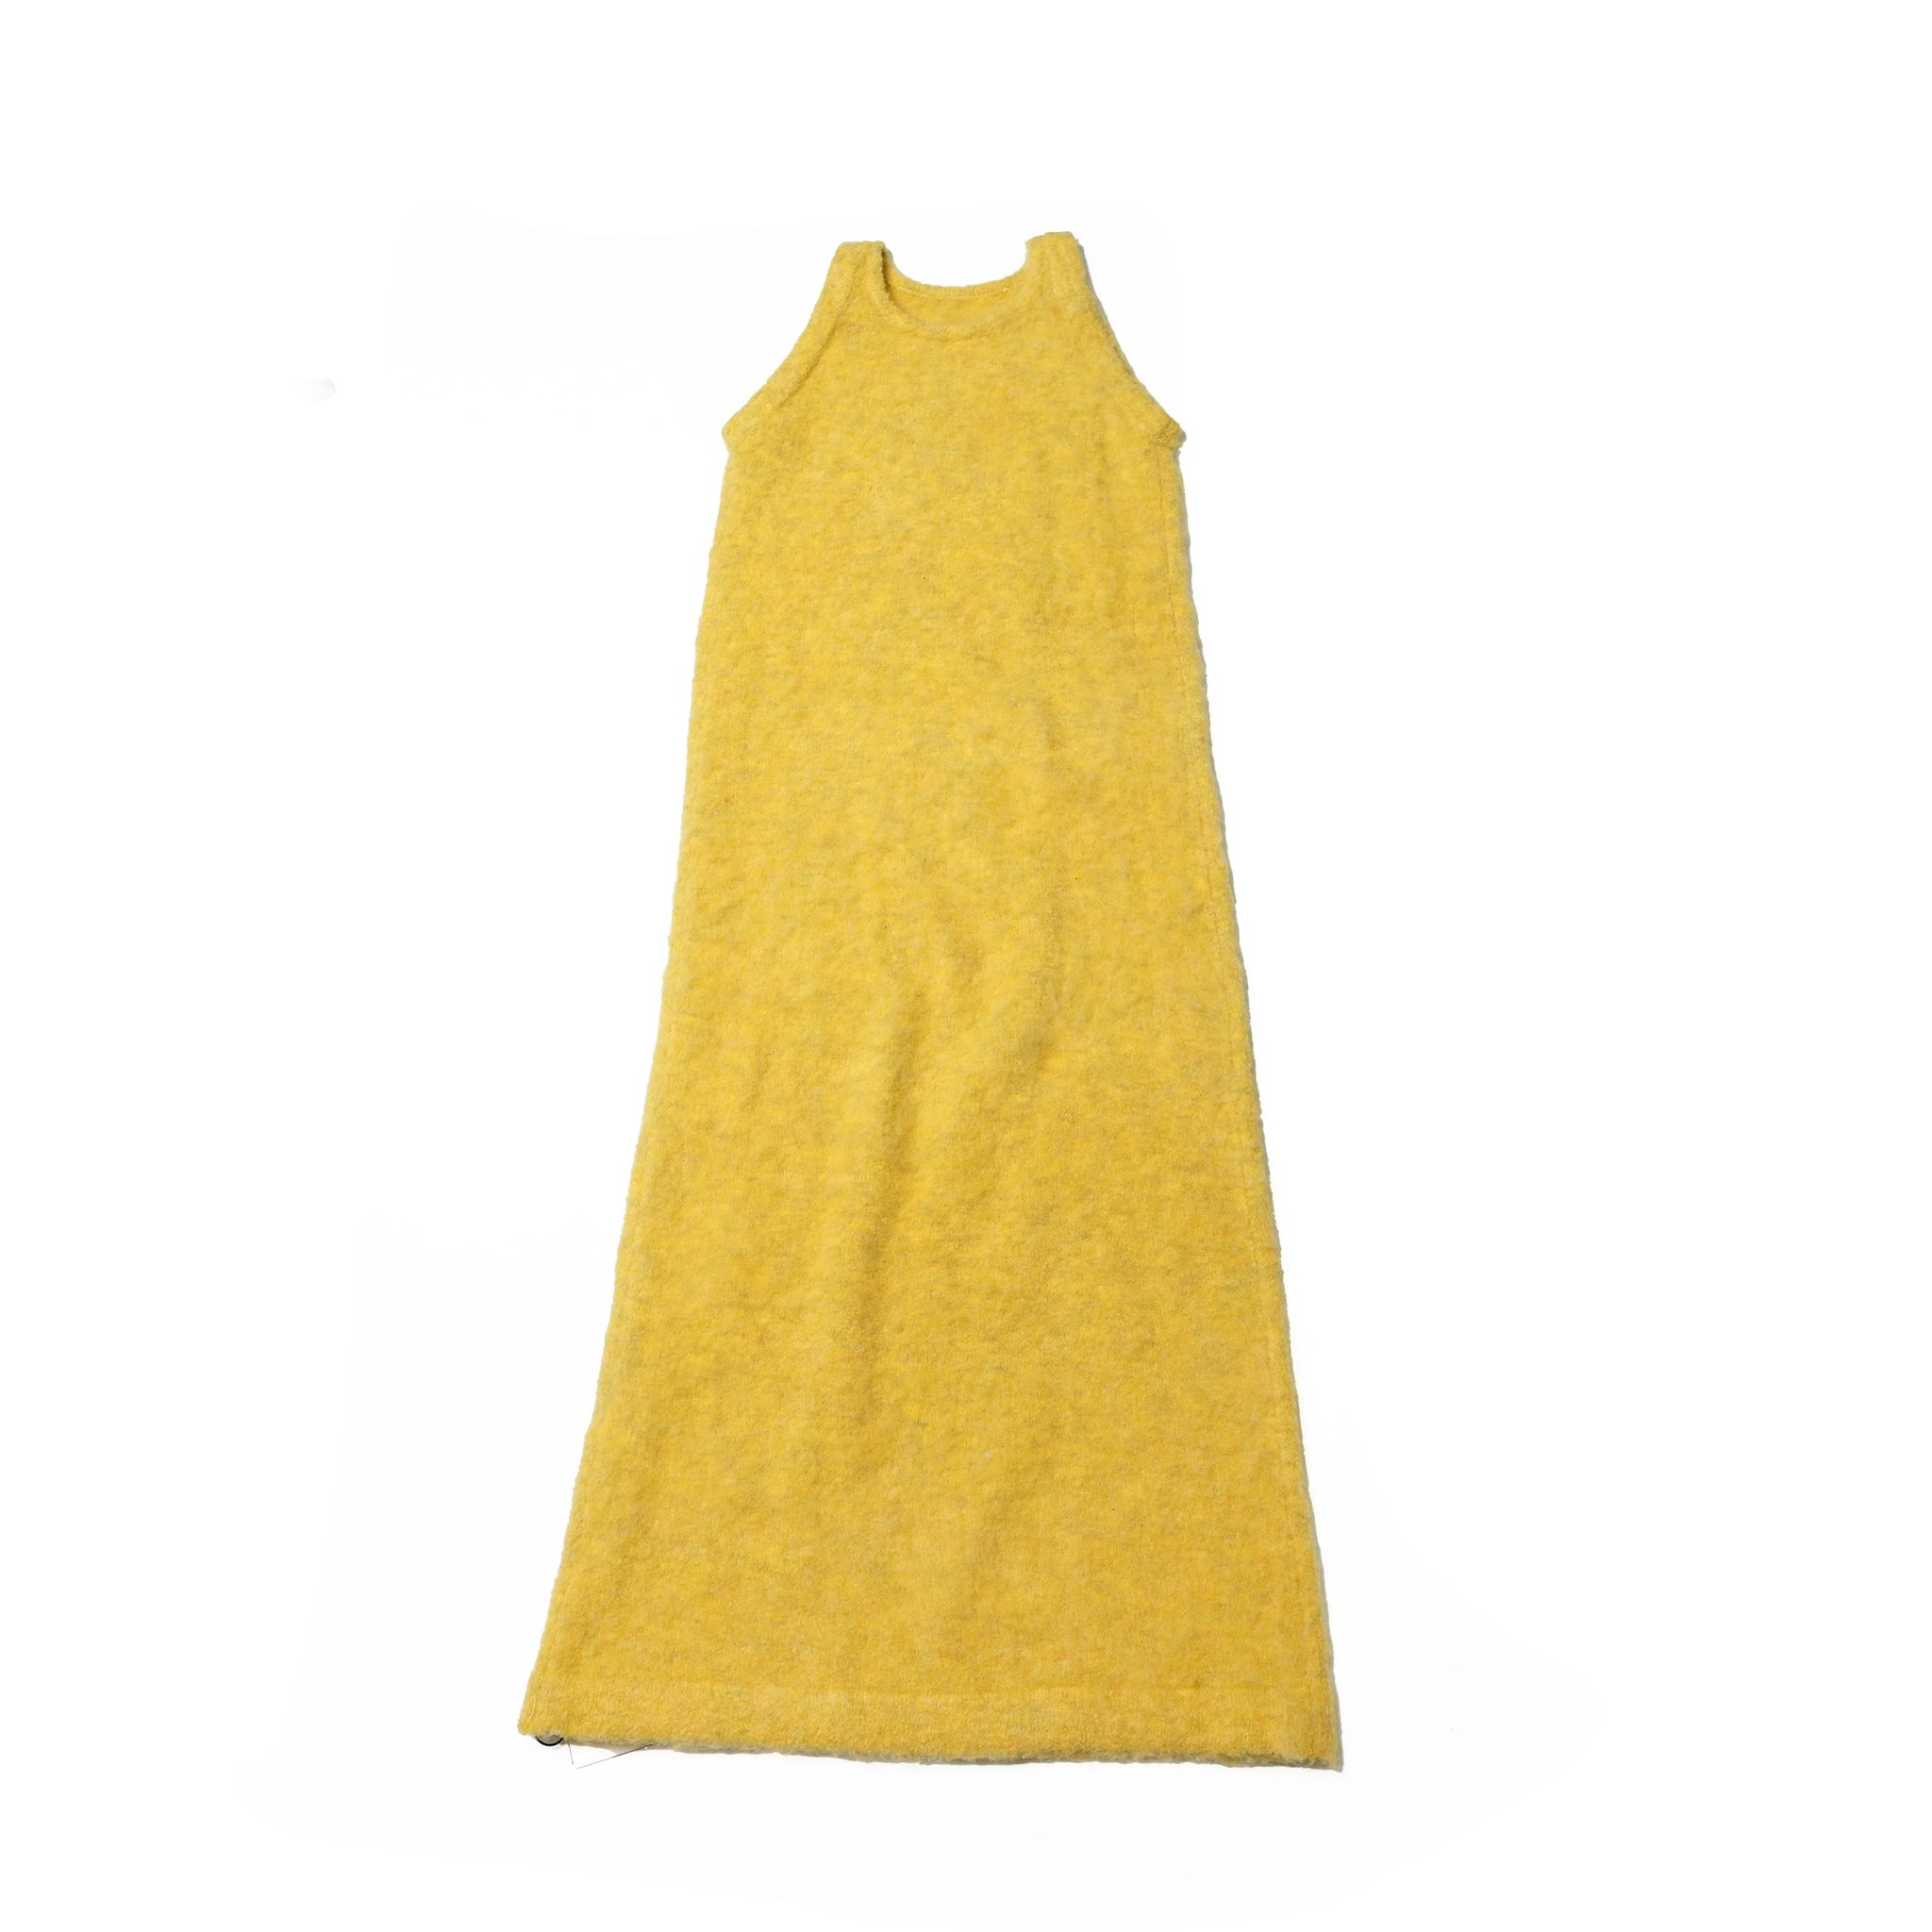 Name:Soft Light I Line Knit Dress | Color:Yellow Sapphire【AMBERGLEAM_アンバーグリーム】| No:11030131118